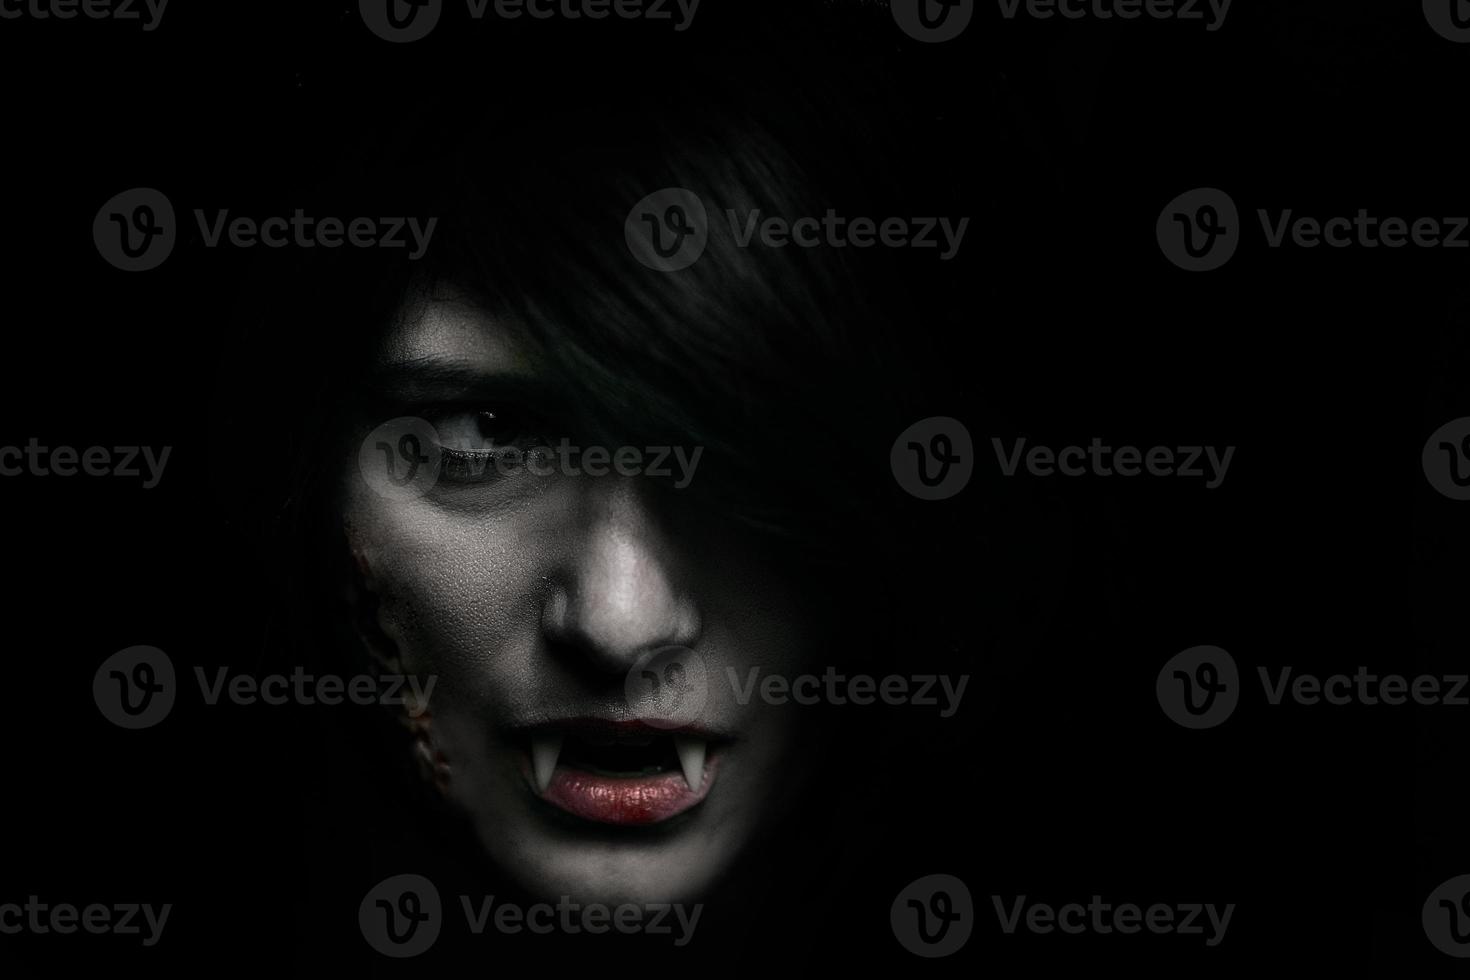 halloween vampire belle femme sur fond noir photo